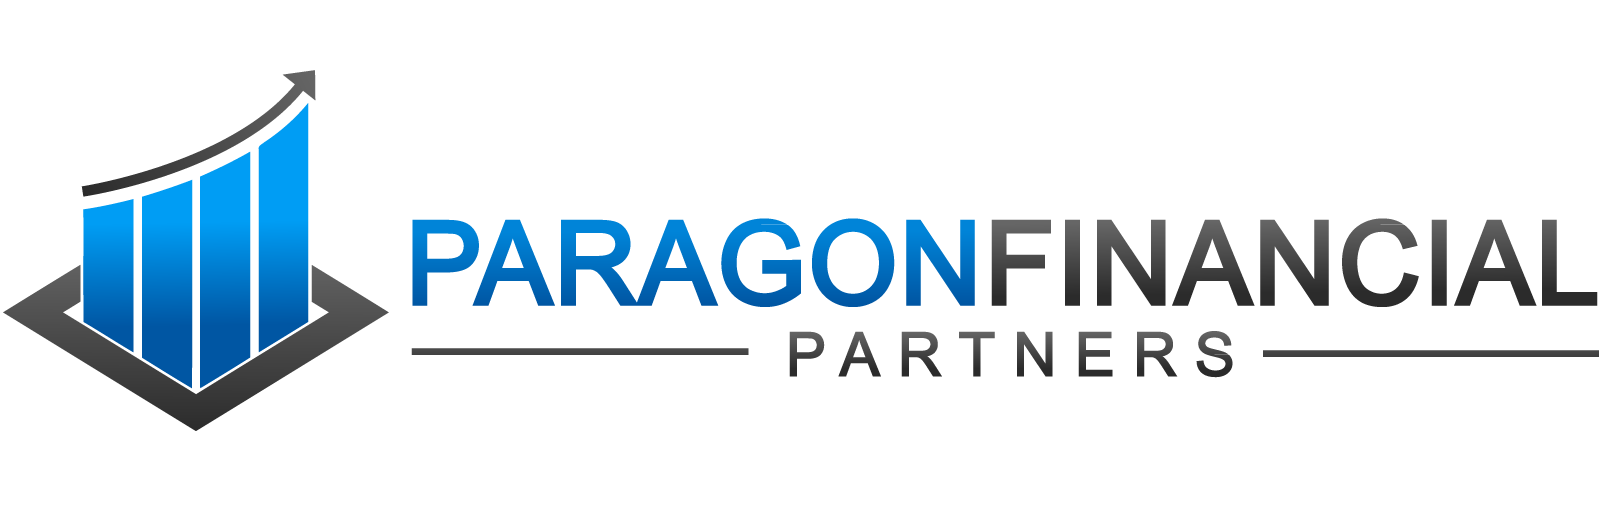 Paragon Financial Partners